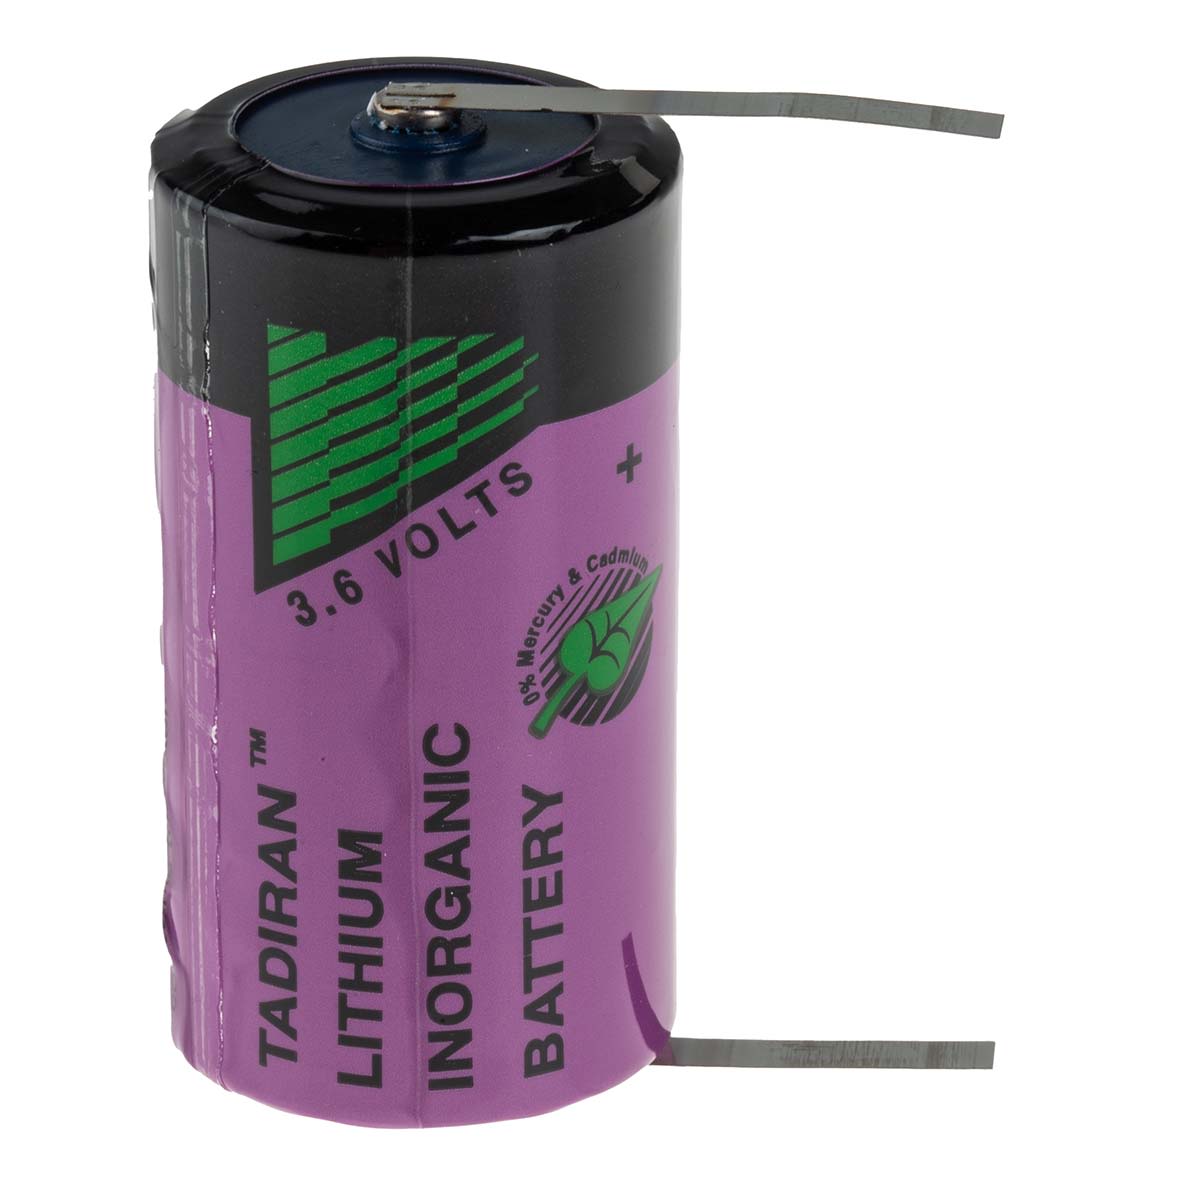 Tadiran Li-Thionylchlorid C Batterie, 3.6V, 8.5Ah mit Lötfahnen-Anschluss